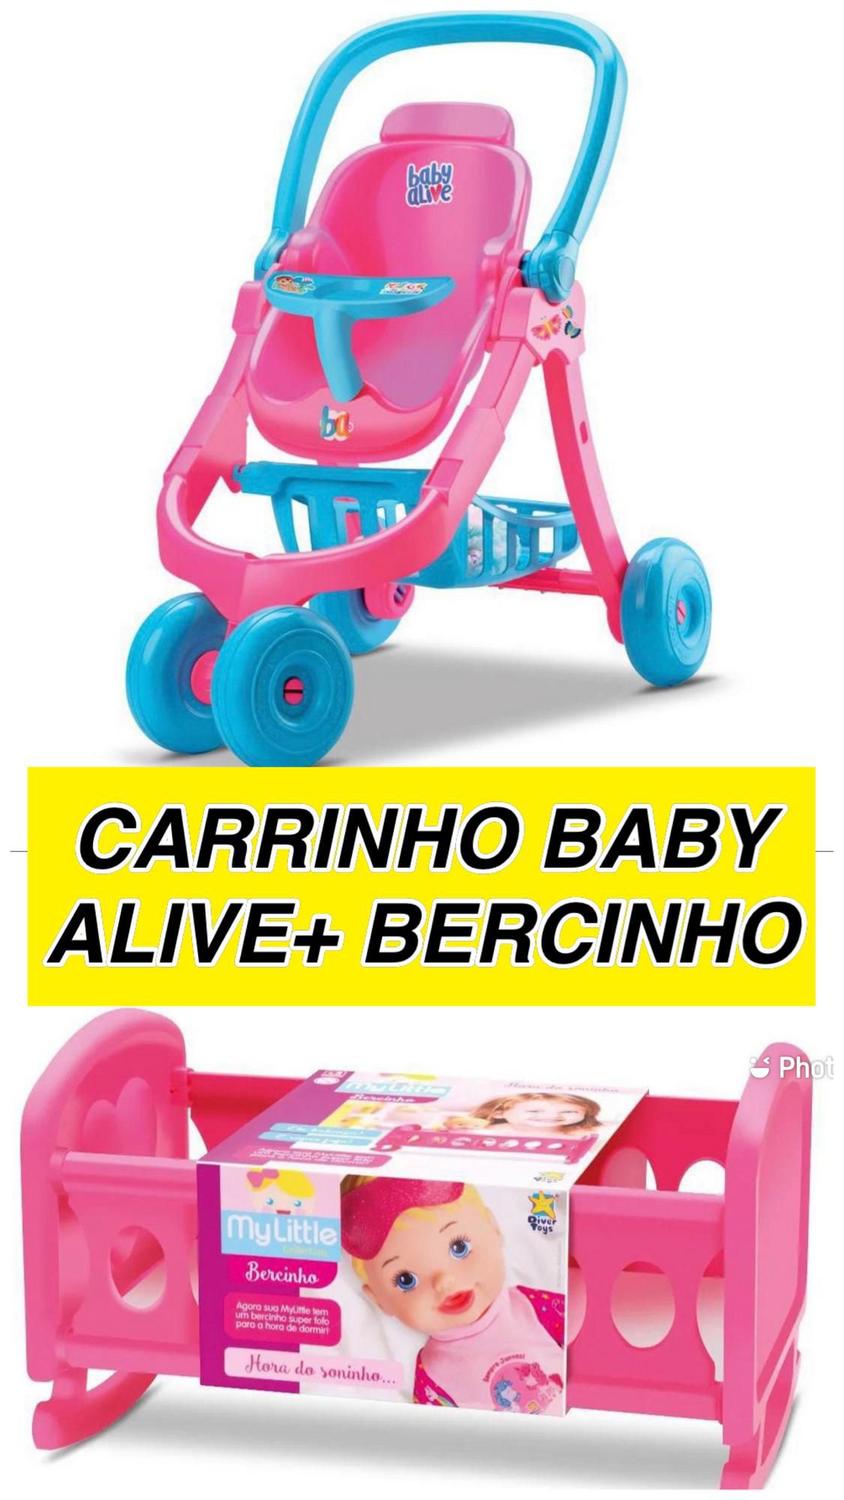 Disguised Eggplant Auto Carrinho de boneca baby alive ref.: 8141 + bercinho my little ref.: 8091  divertoys - Brinquedos Baby Alive - Magazine Luiza